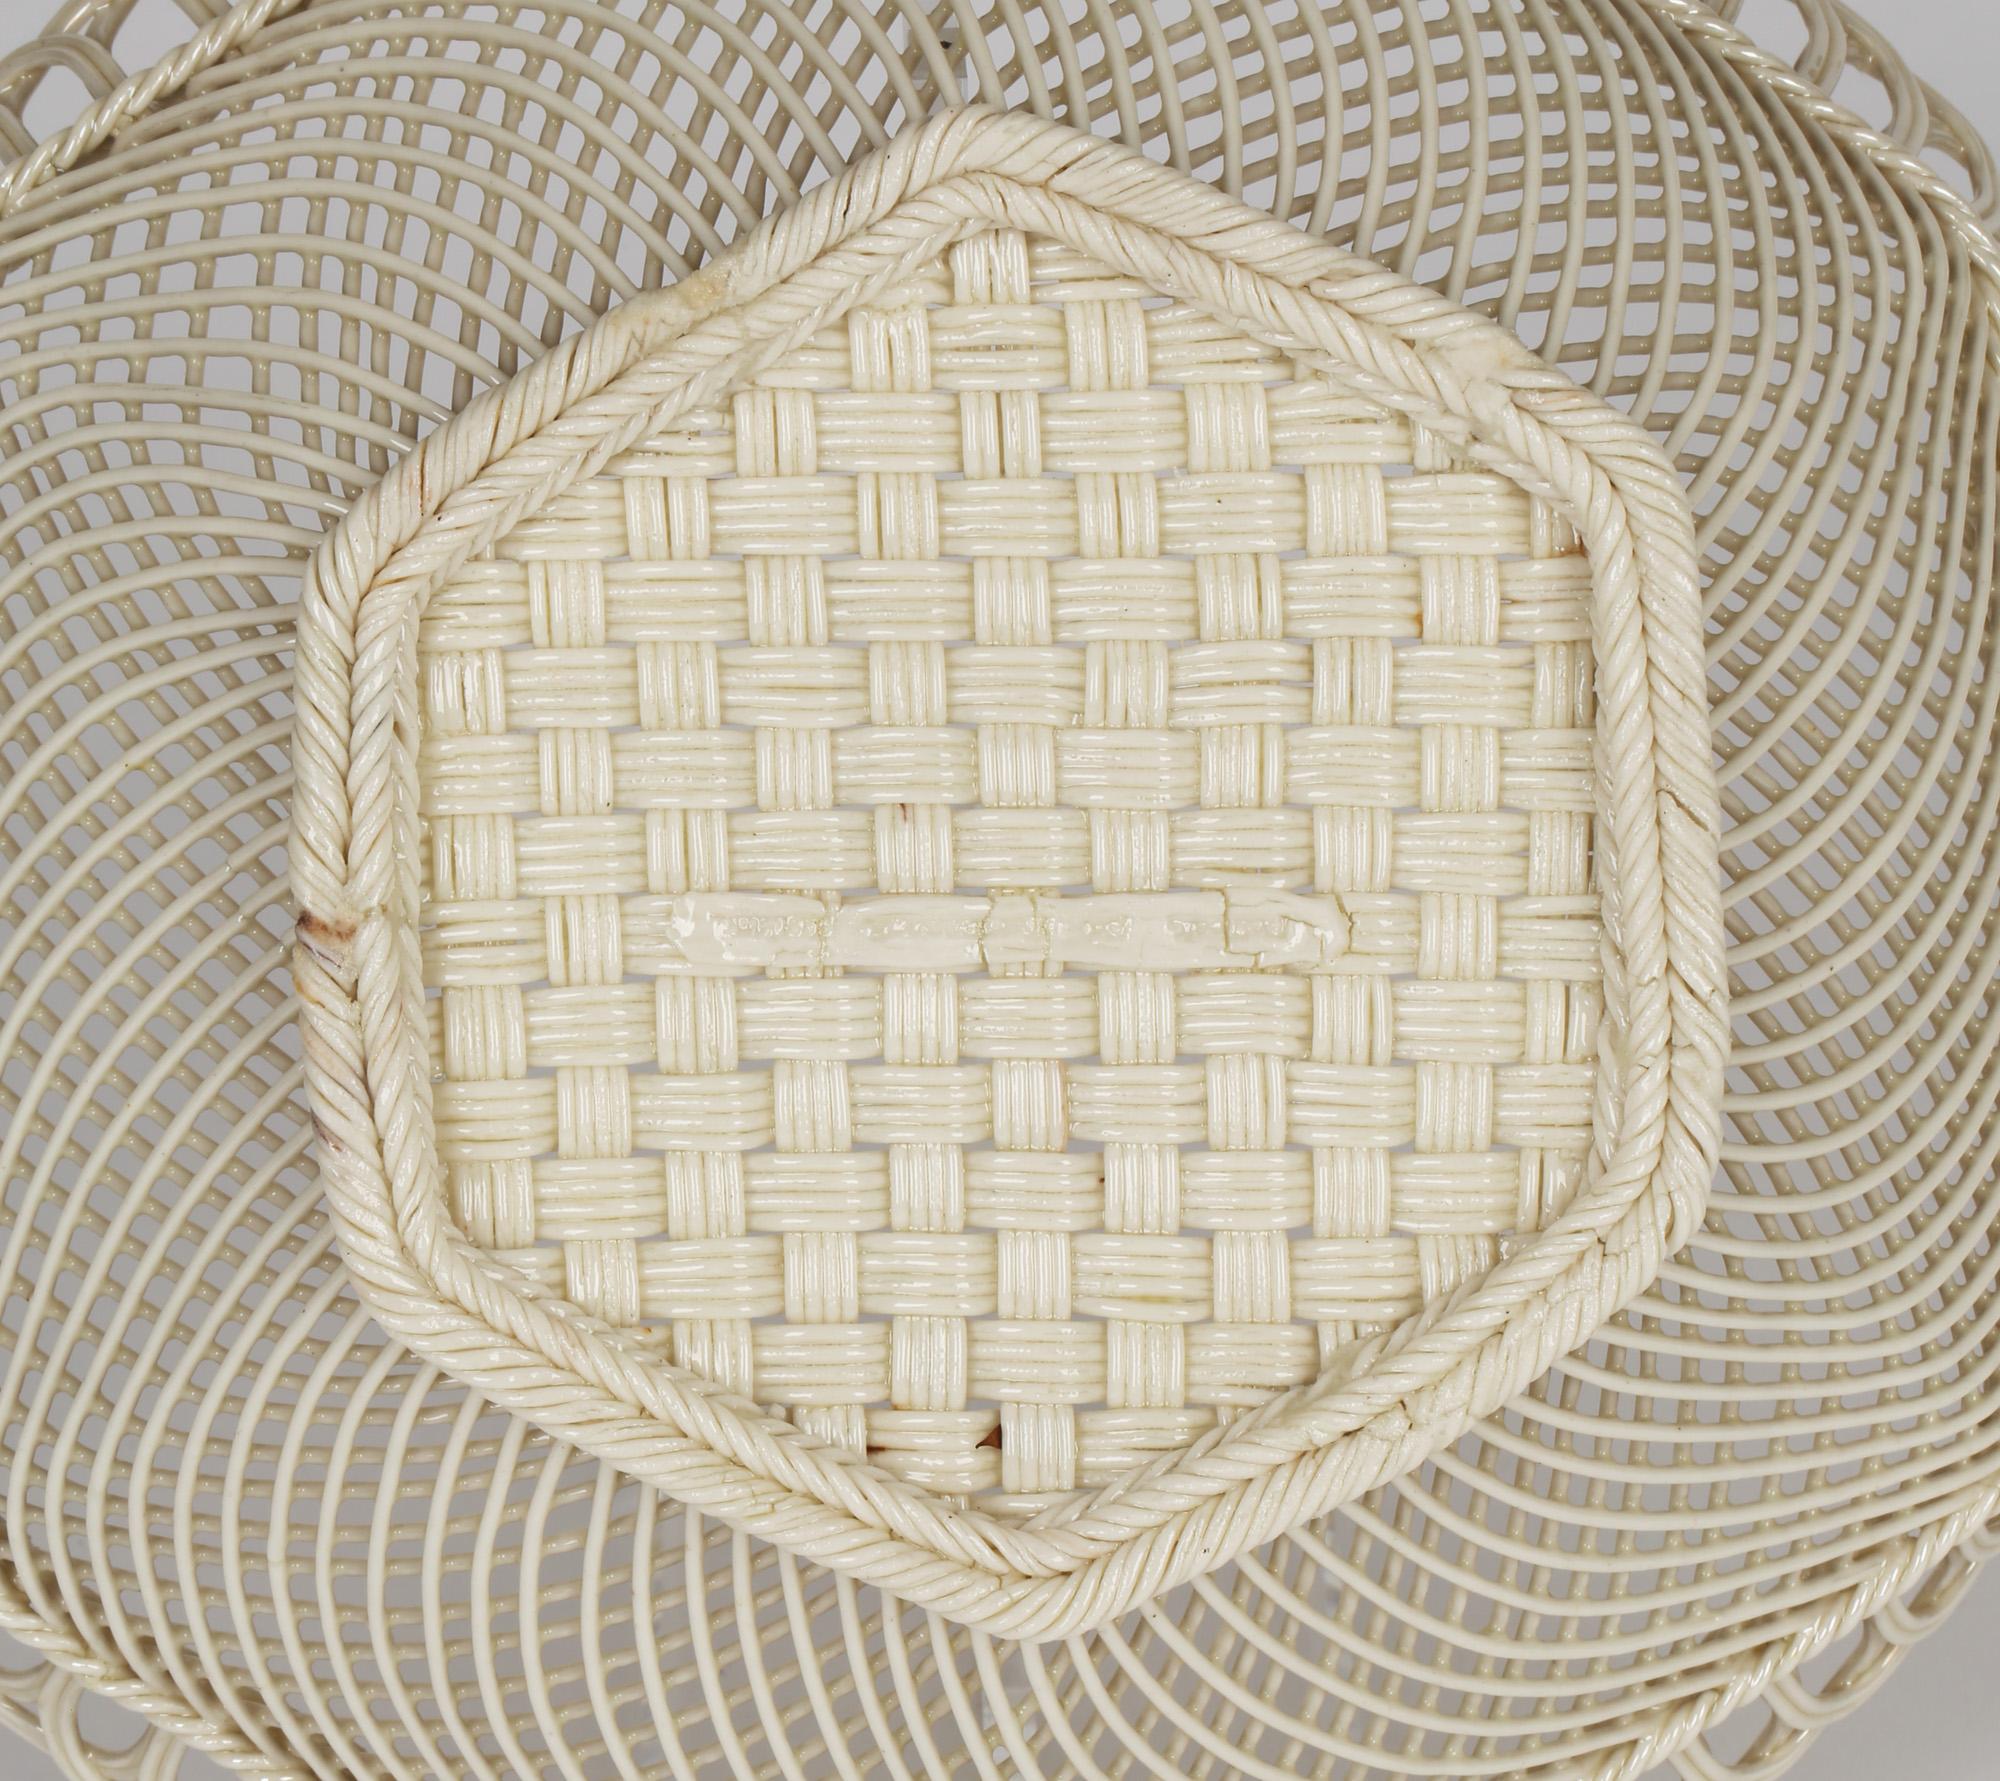 19th Century Belleek Irish Antique Porcelain Hexagonal Shaped Lustre Glazed Basket For Sale